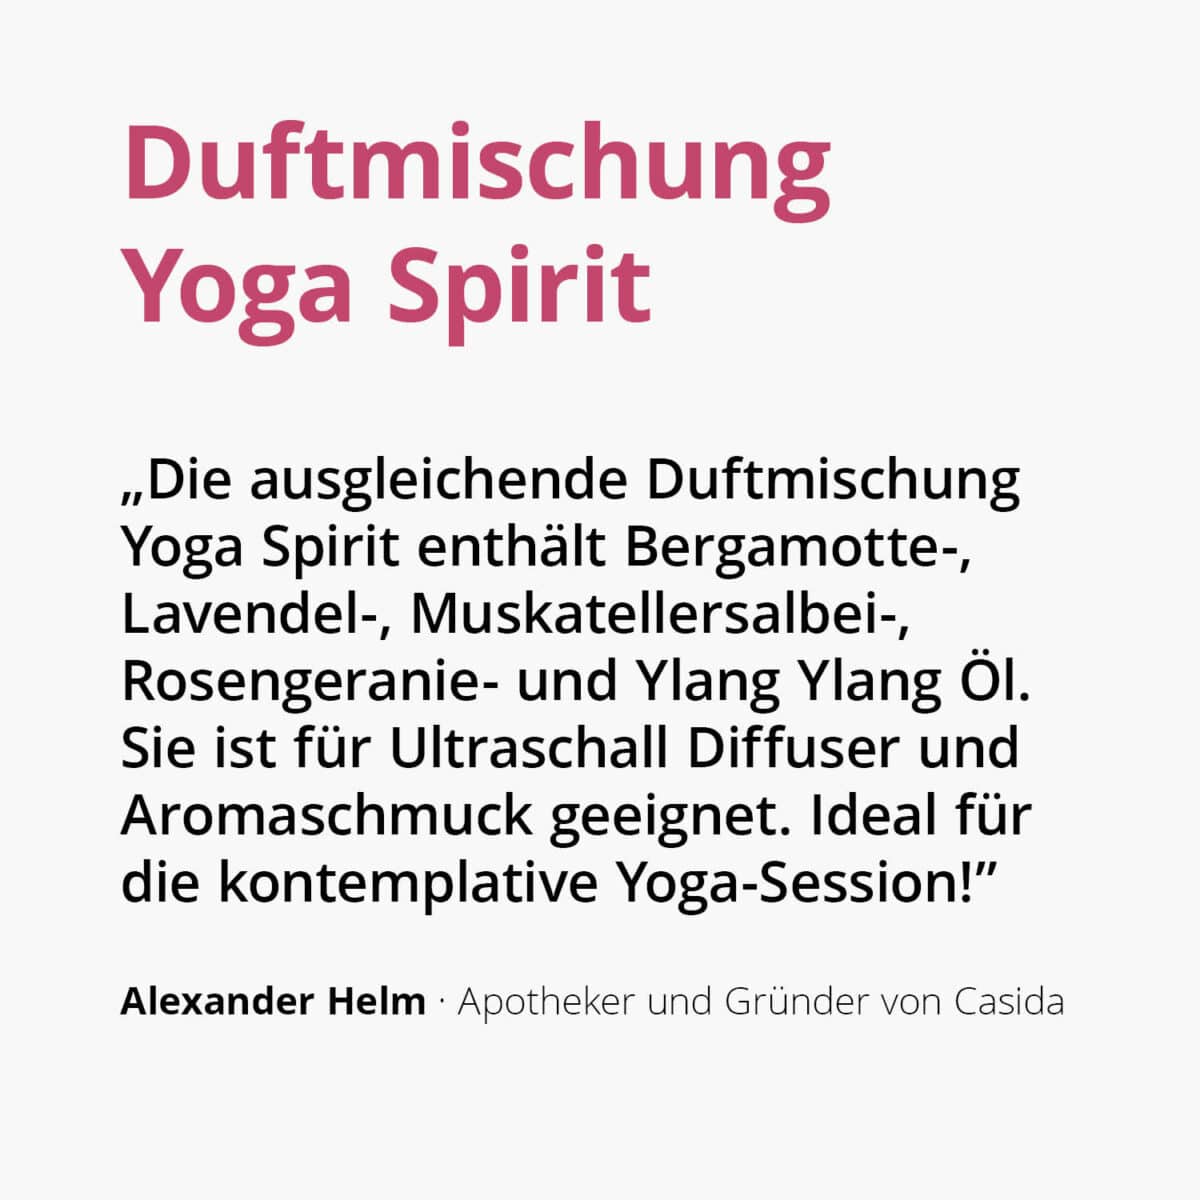 Duftmischung Yoga Spirit